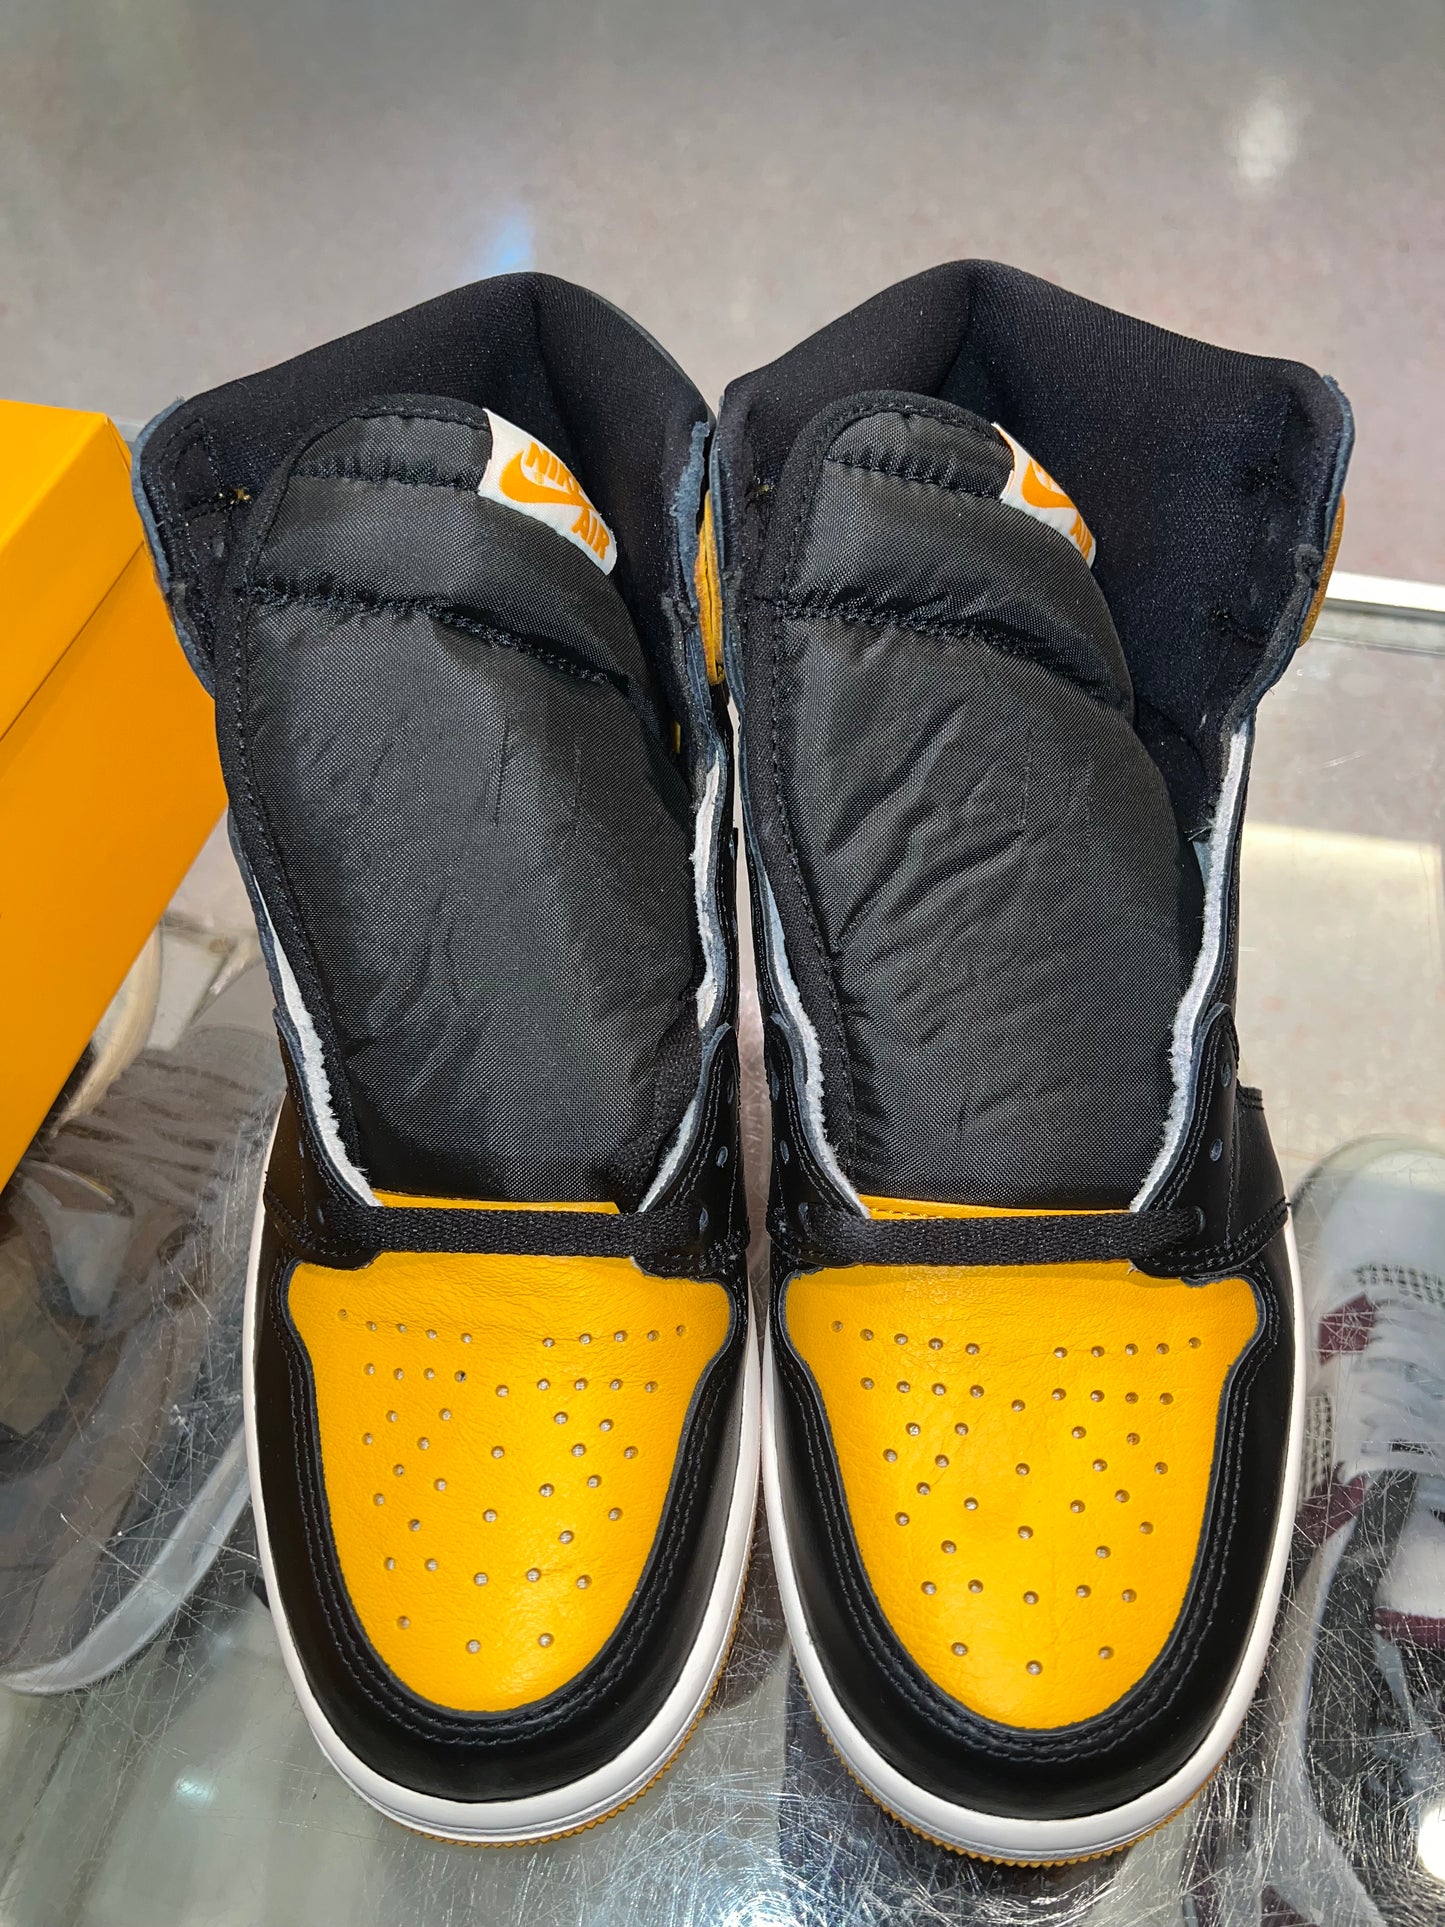 Size 9 Air Jordan 1 “Taxi” Brand New (Mall)